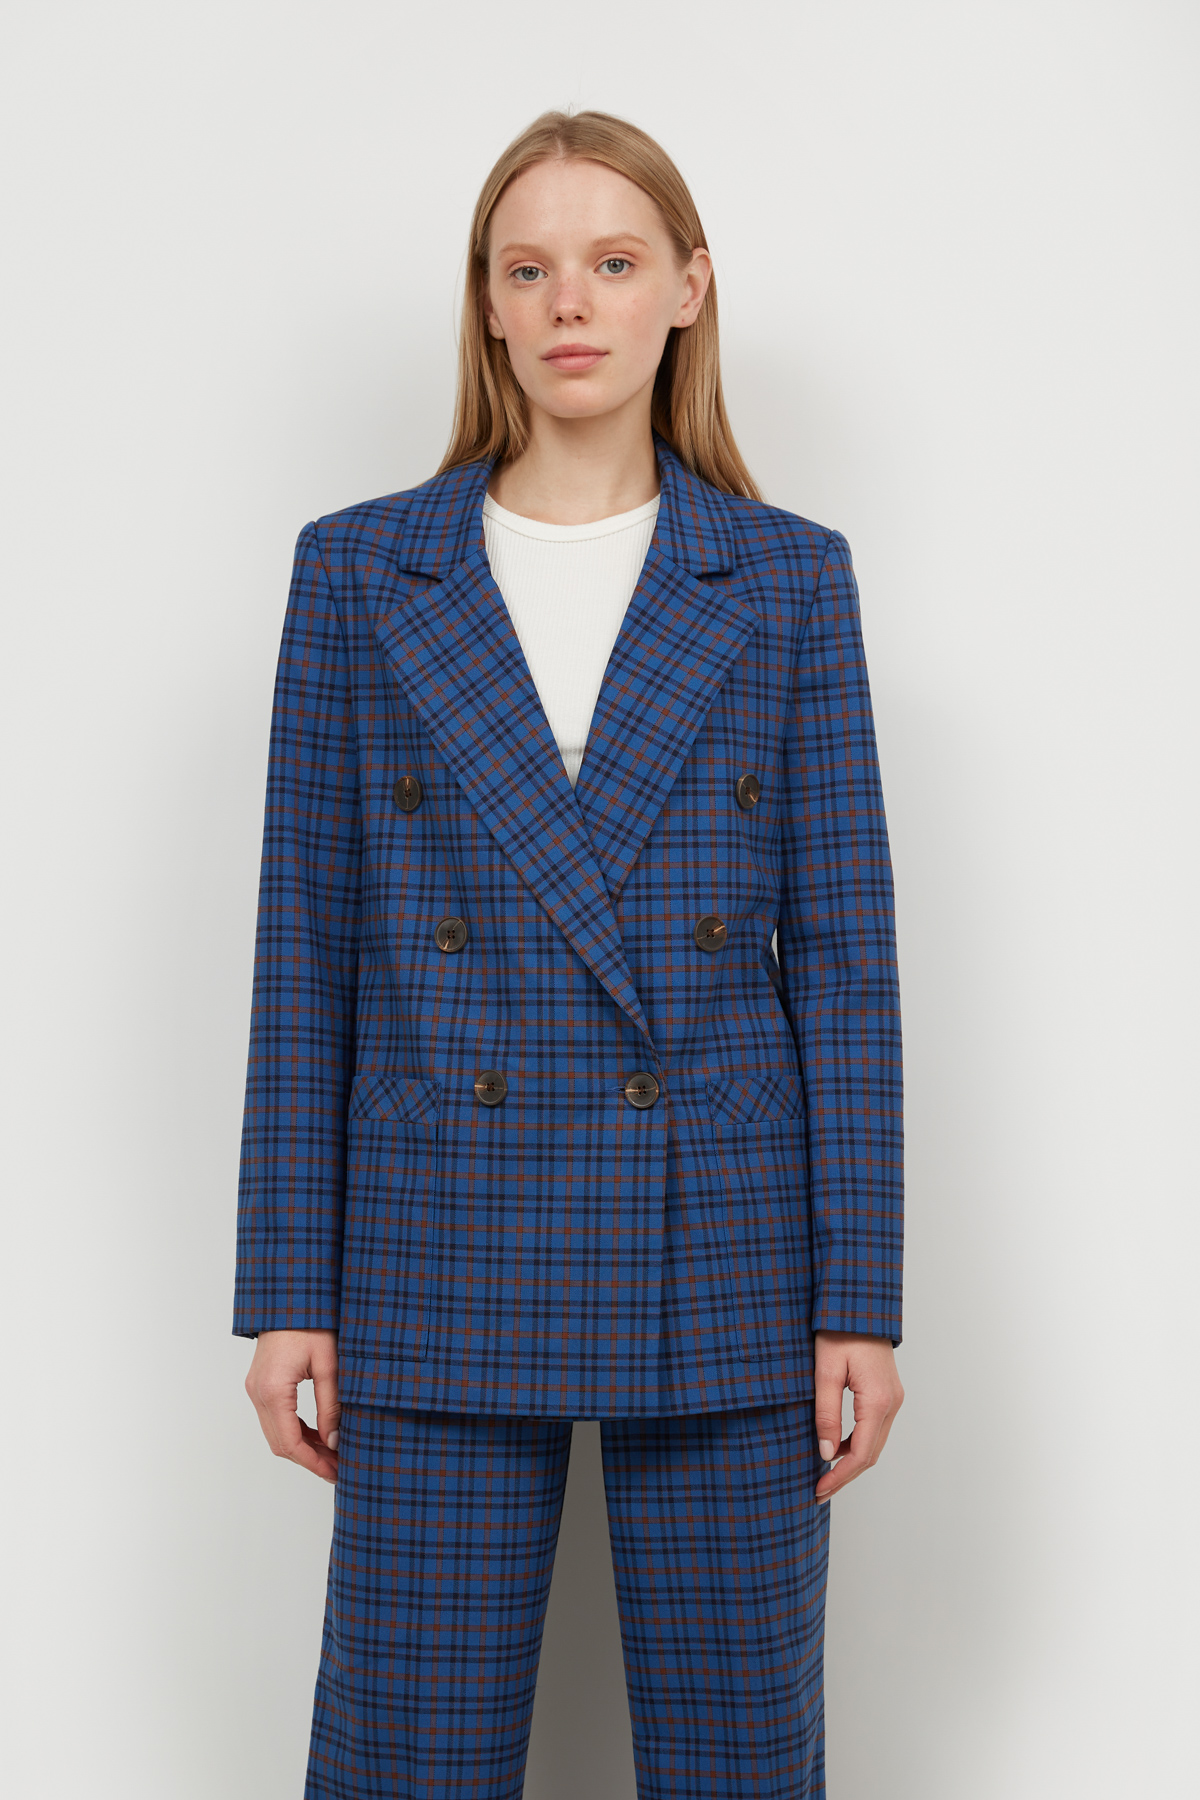 Blue checkered jacket, photo 1